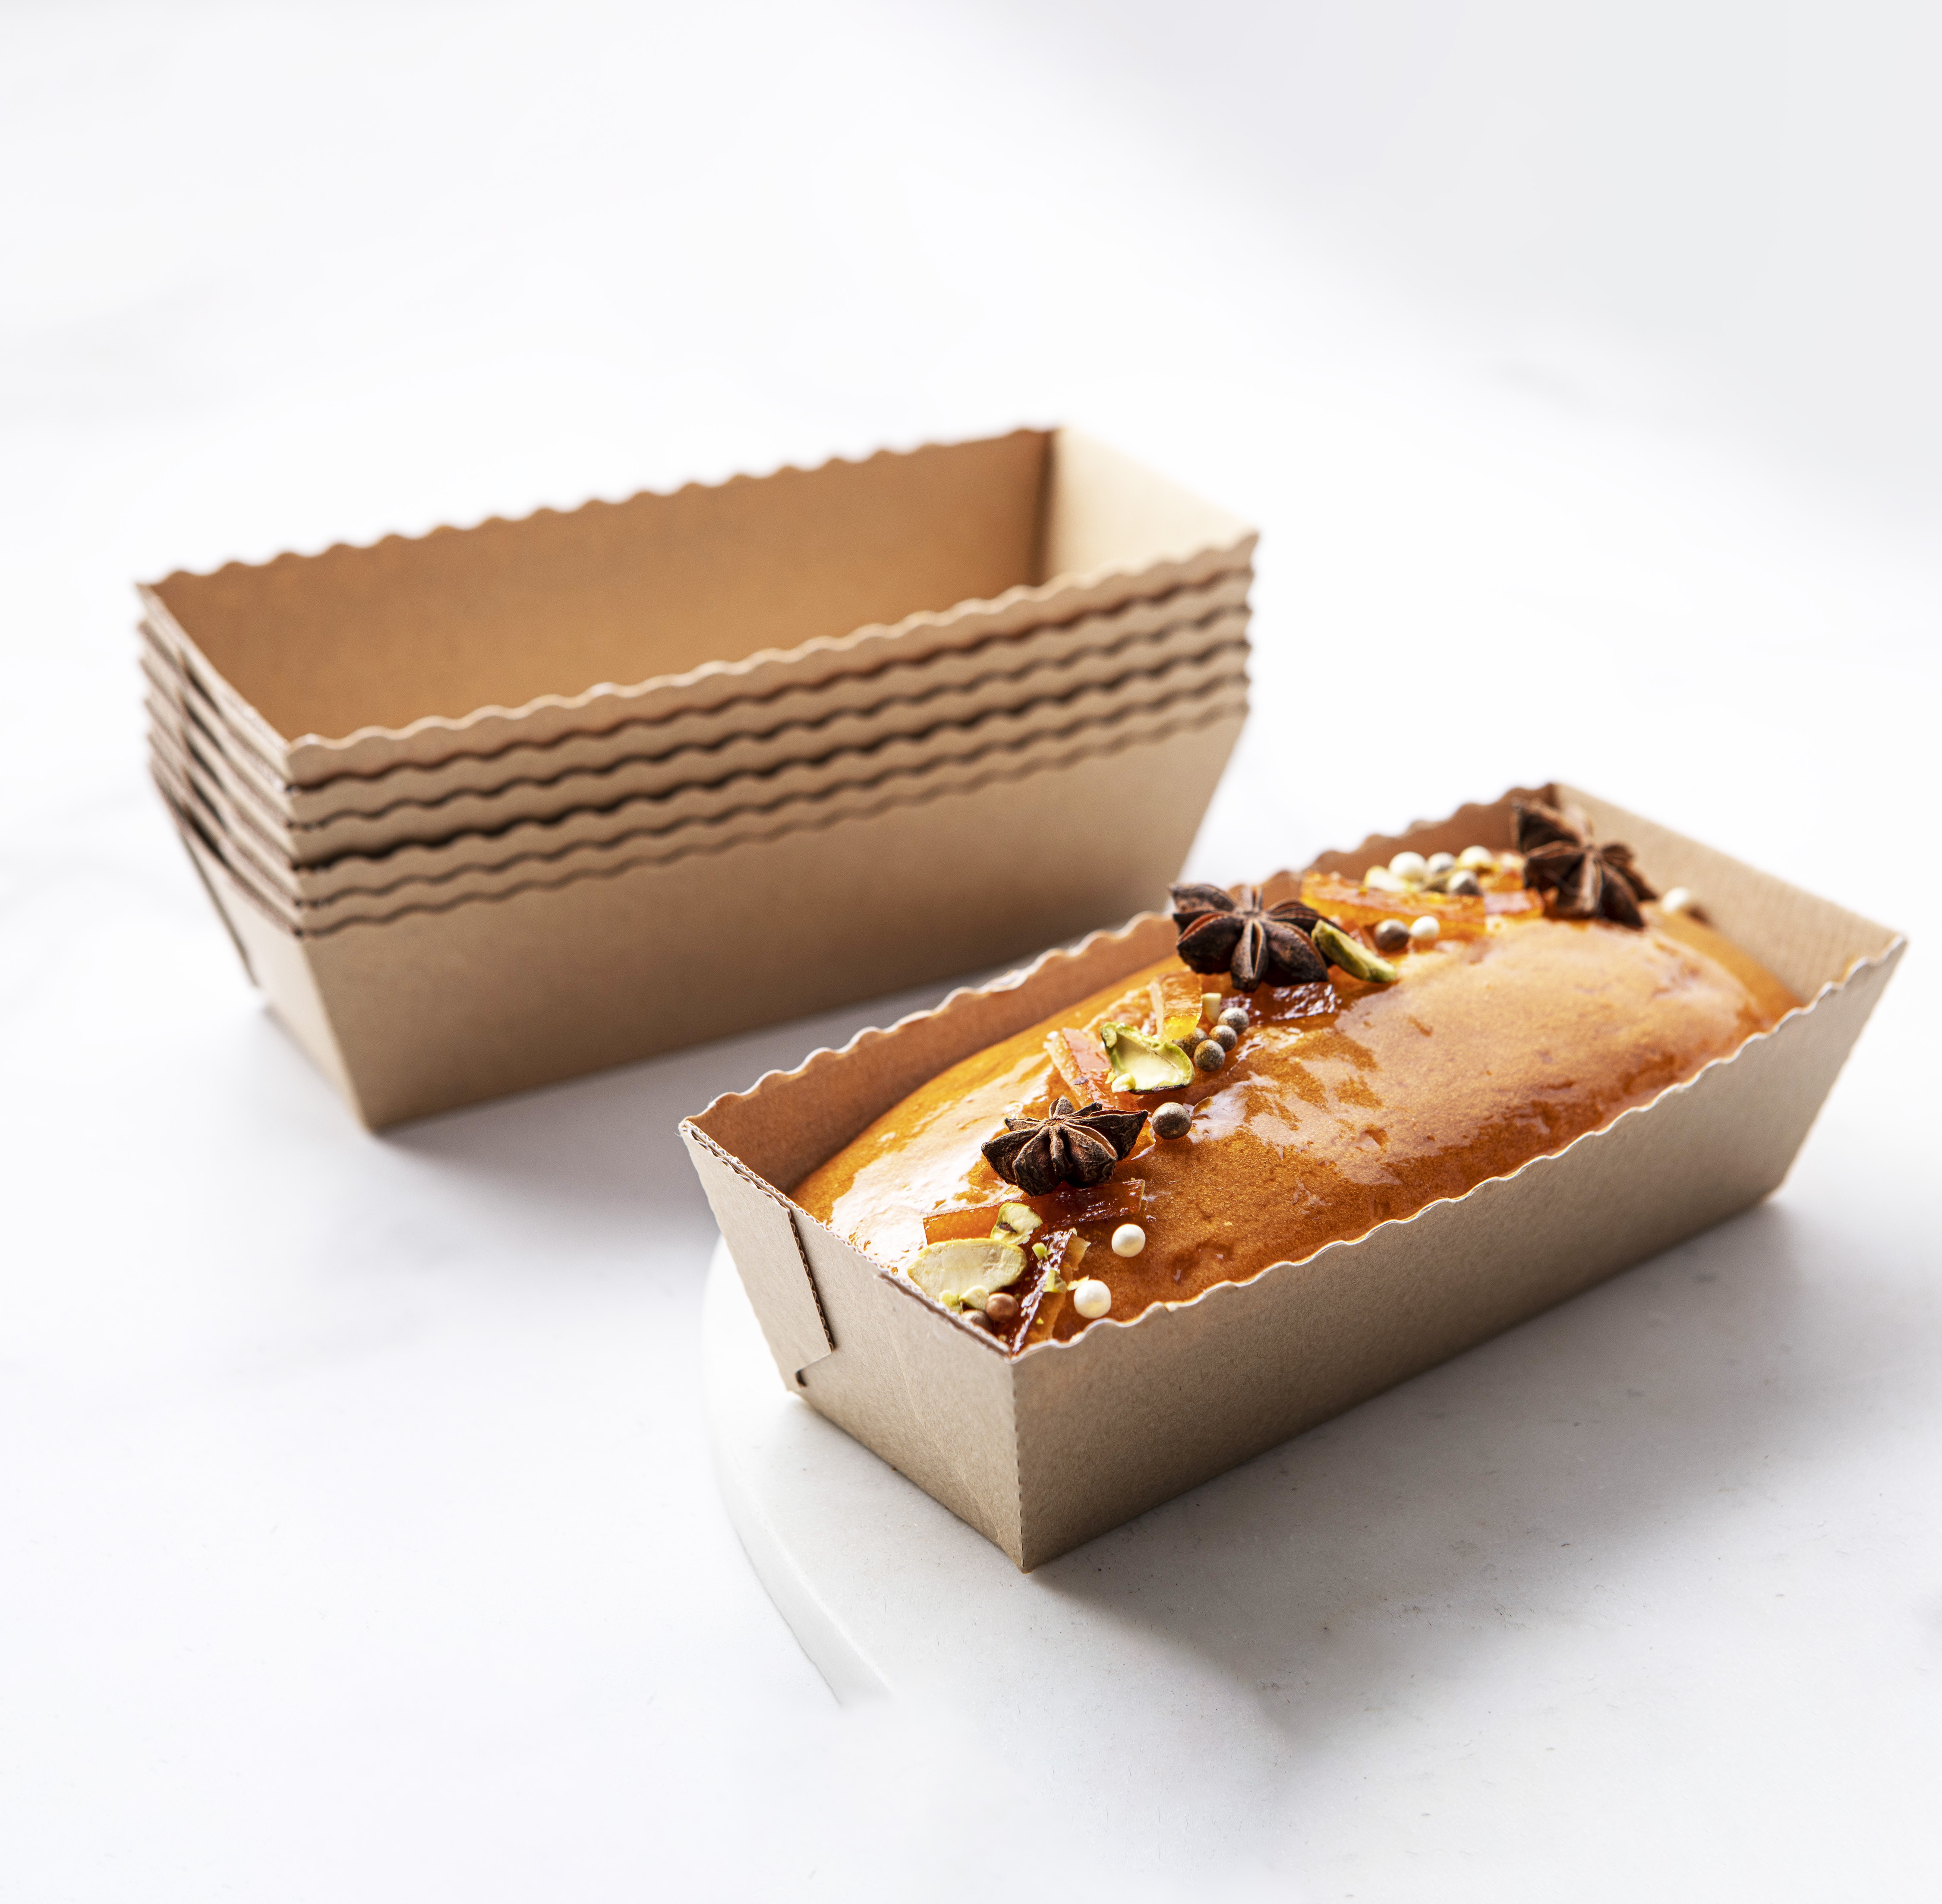 https://www.pastrychefsboutique.com/21843/novacart-169898-kraft-heavy-cardboard-voyage-cake-loaf-pans-185-x-80-x-50-mm-500ml-pack-of-30-cake-and-loaf-paper-pans.jpg